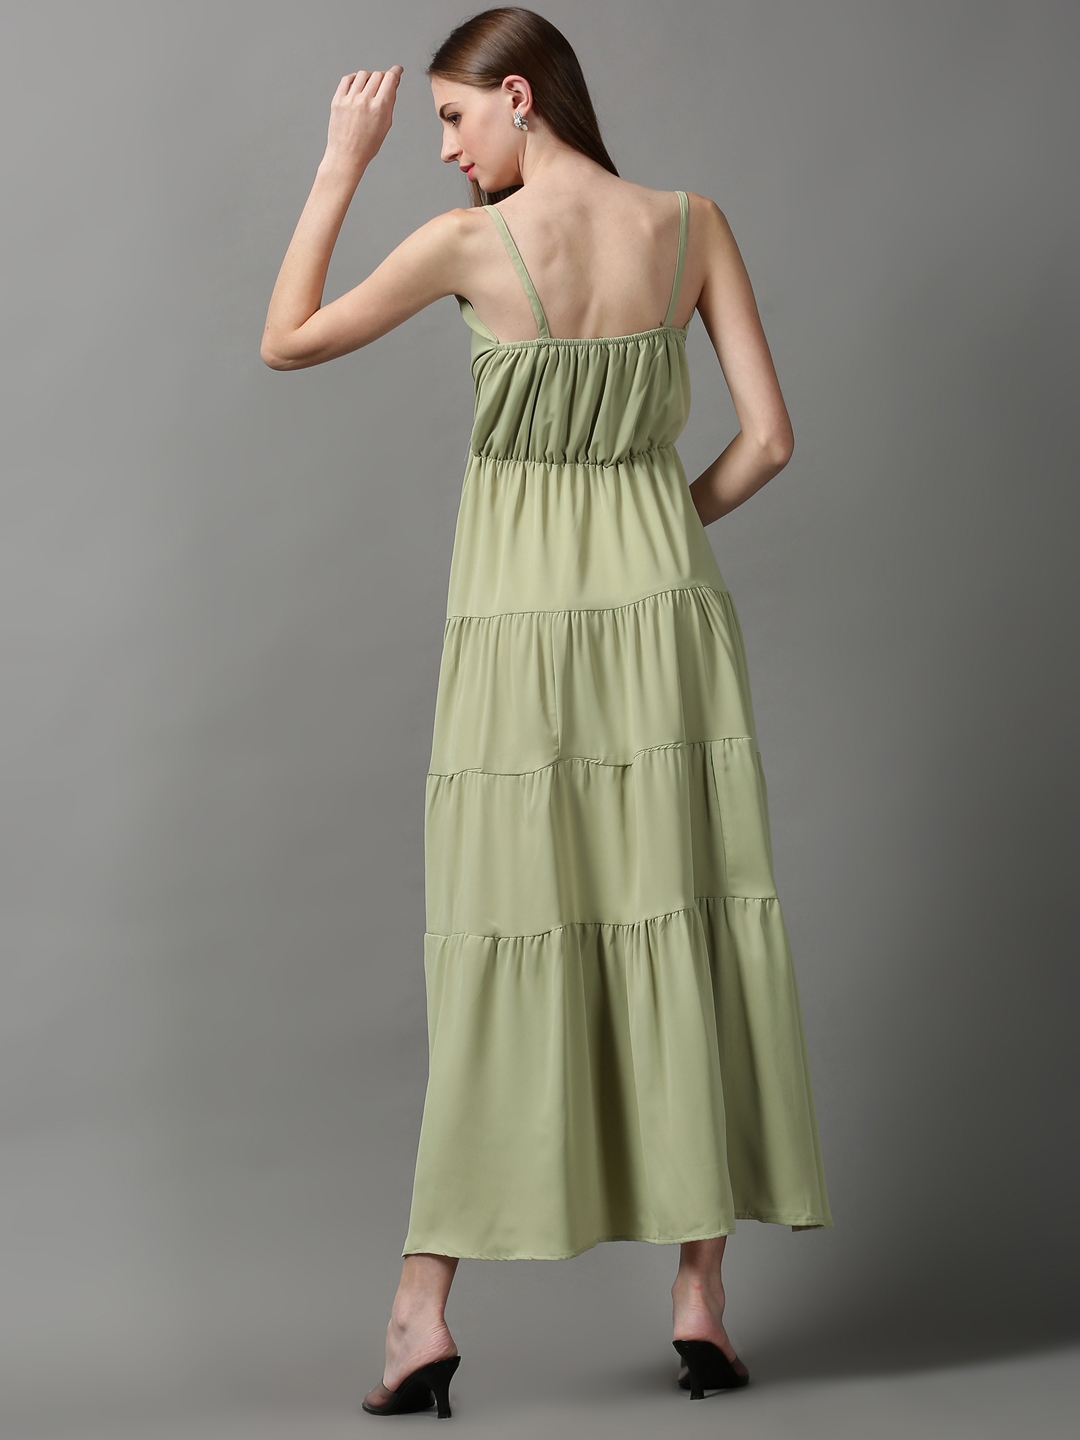 Showoff | SHOWOFF Women's V-Neck Solid Green Maxi Dress 3